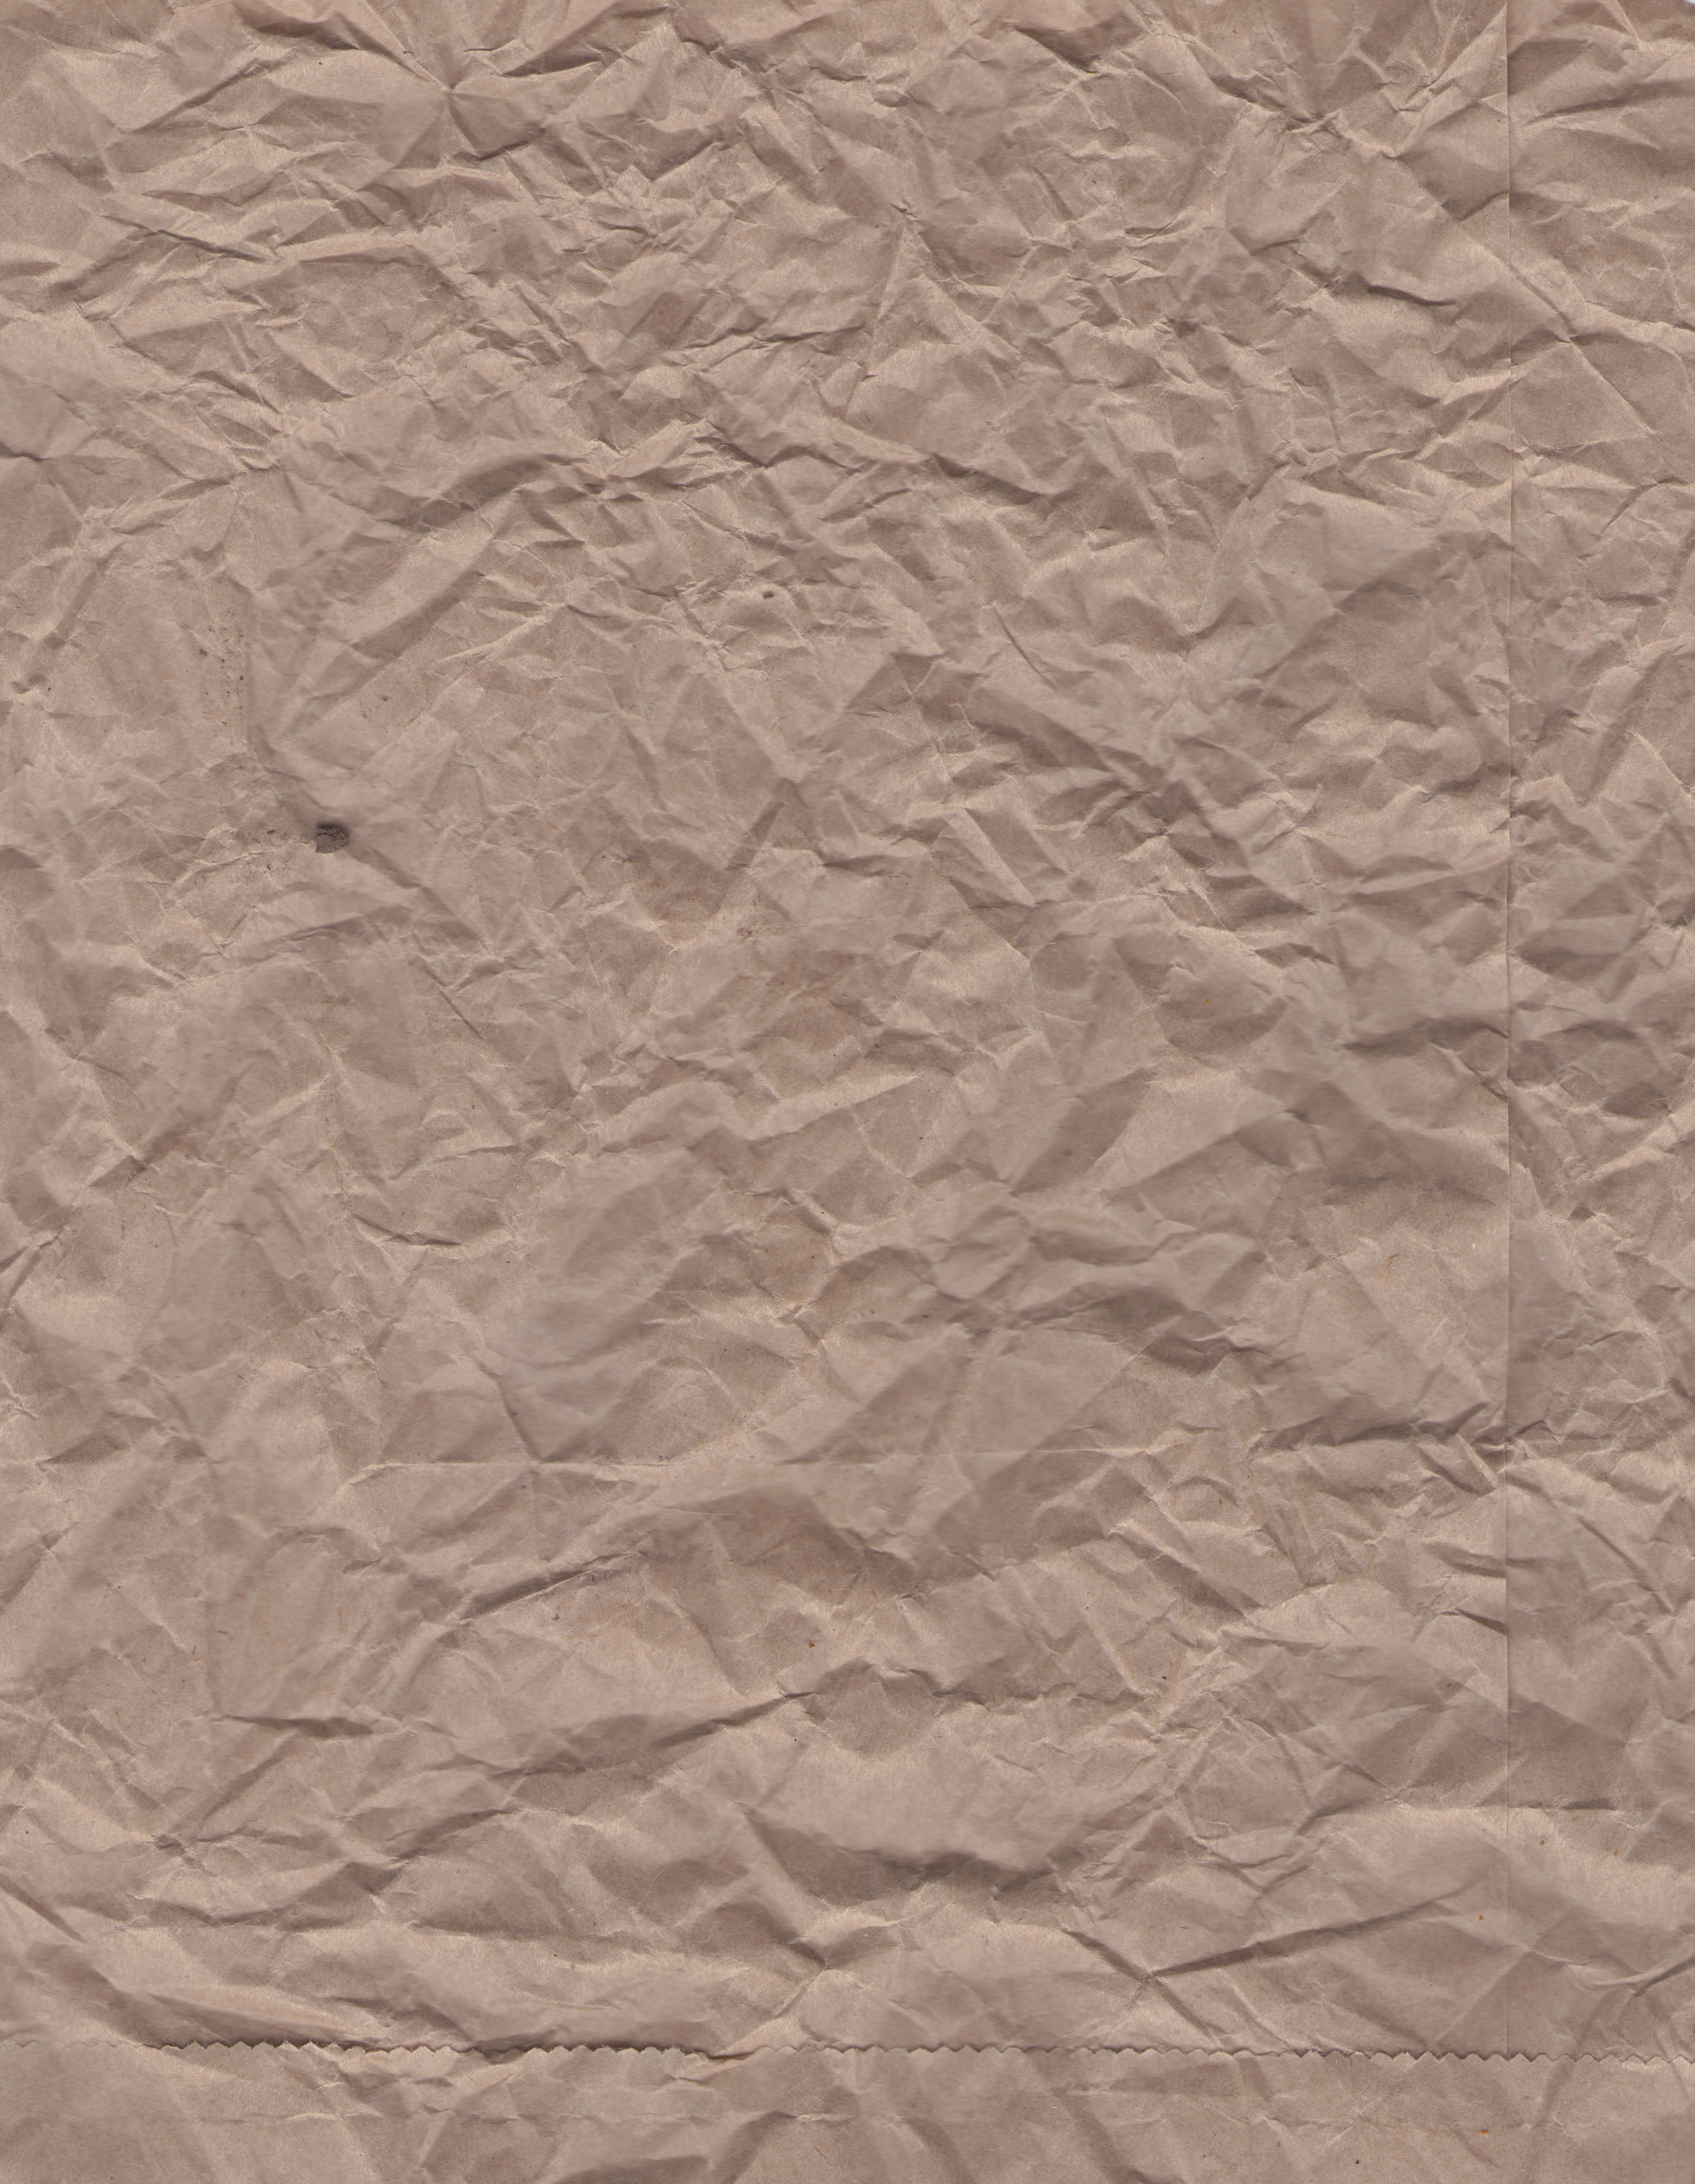 Brown Paper Bag Texture by AbsurdWordPreferred on DeviantArt